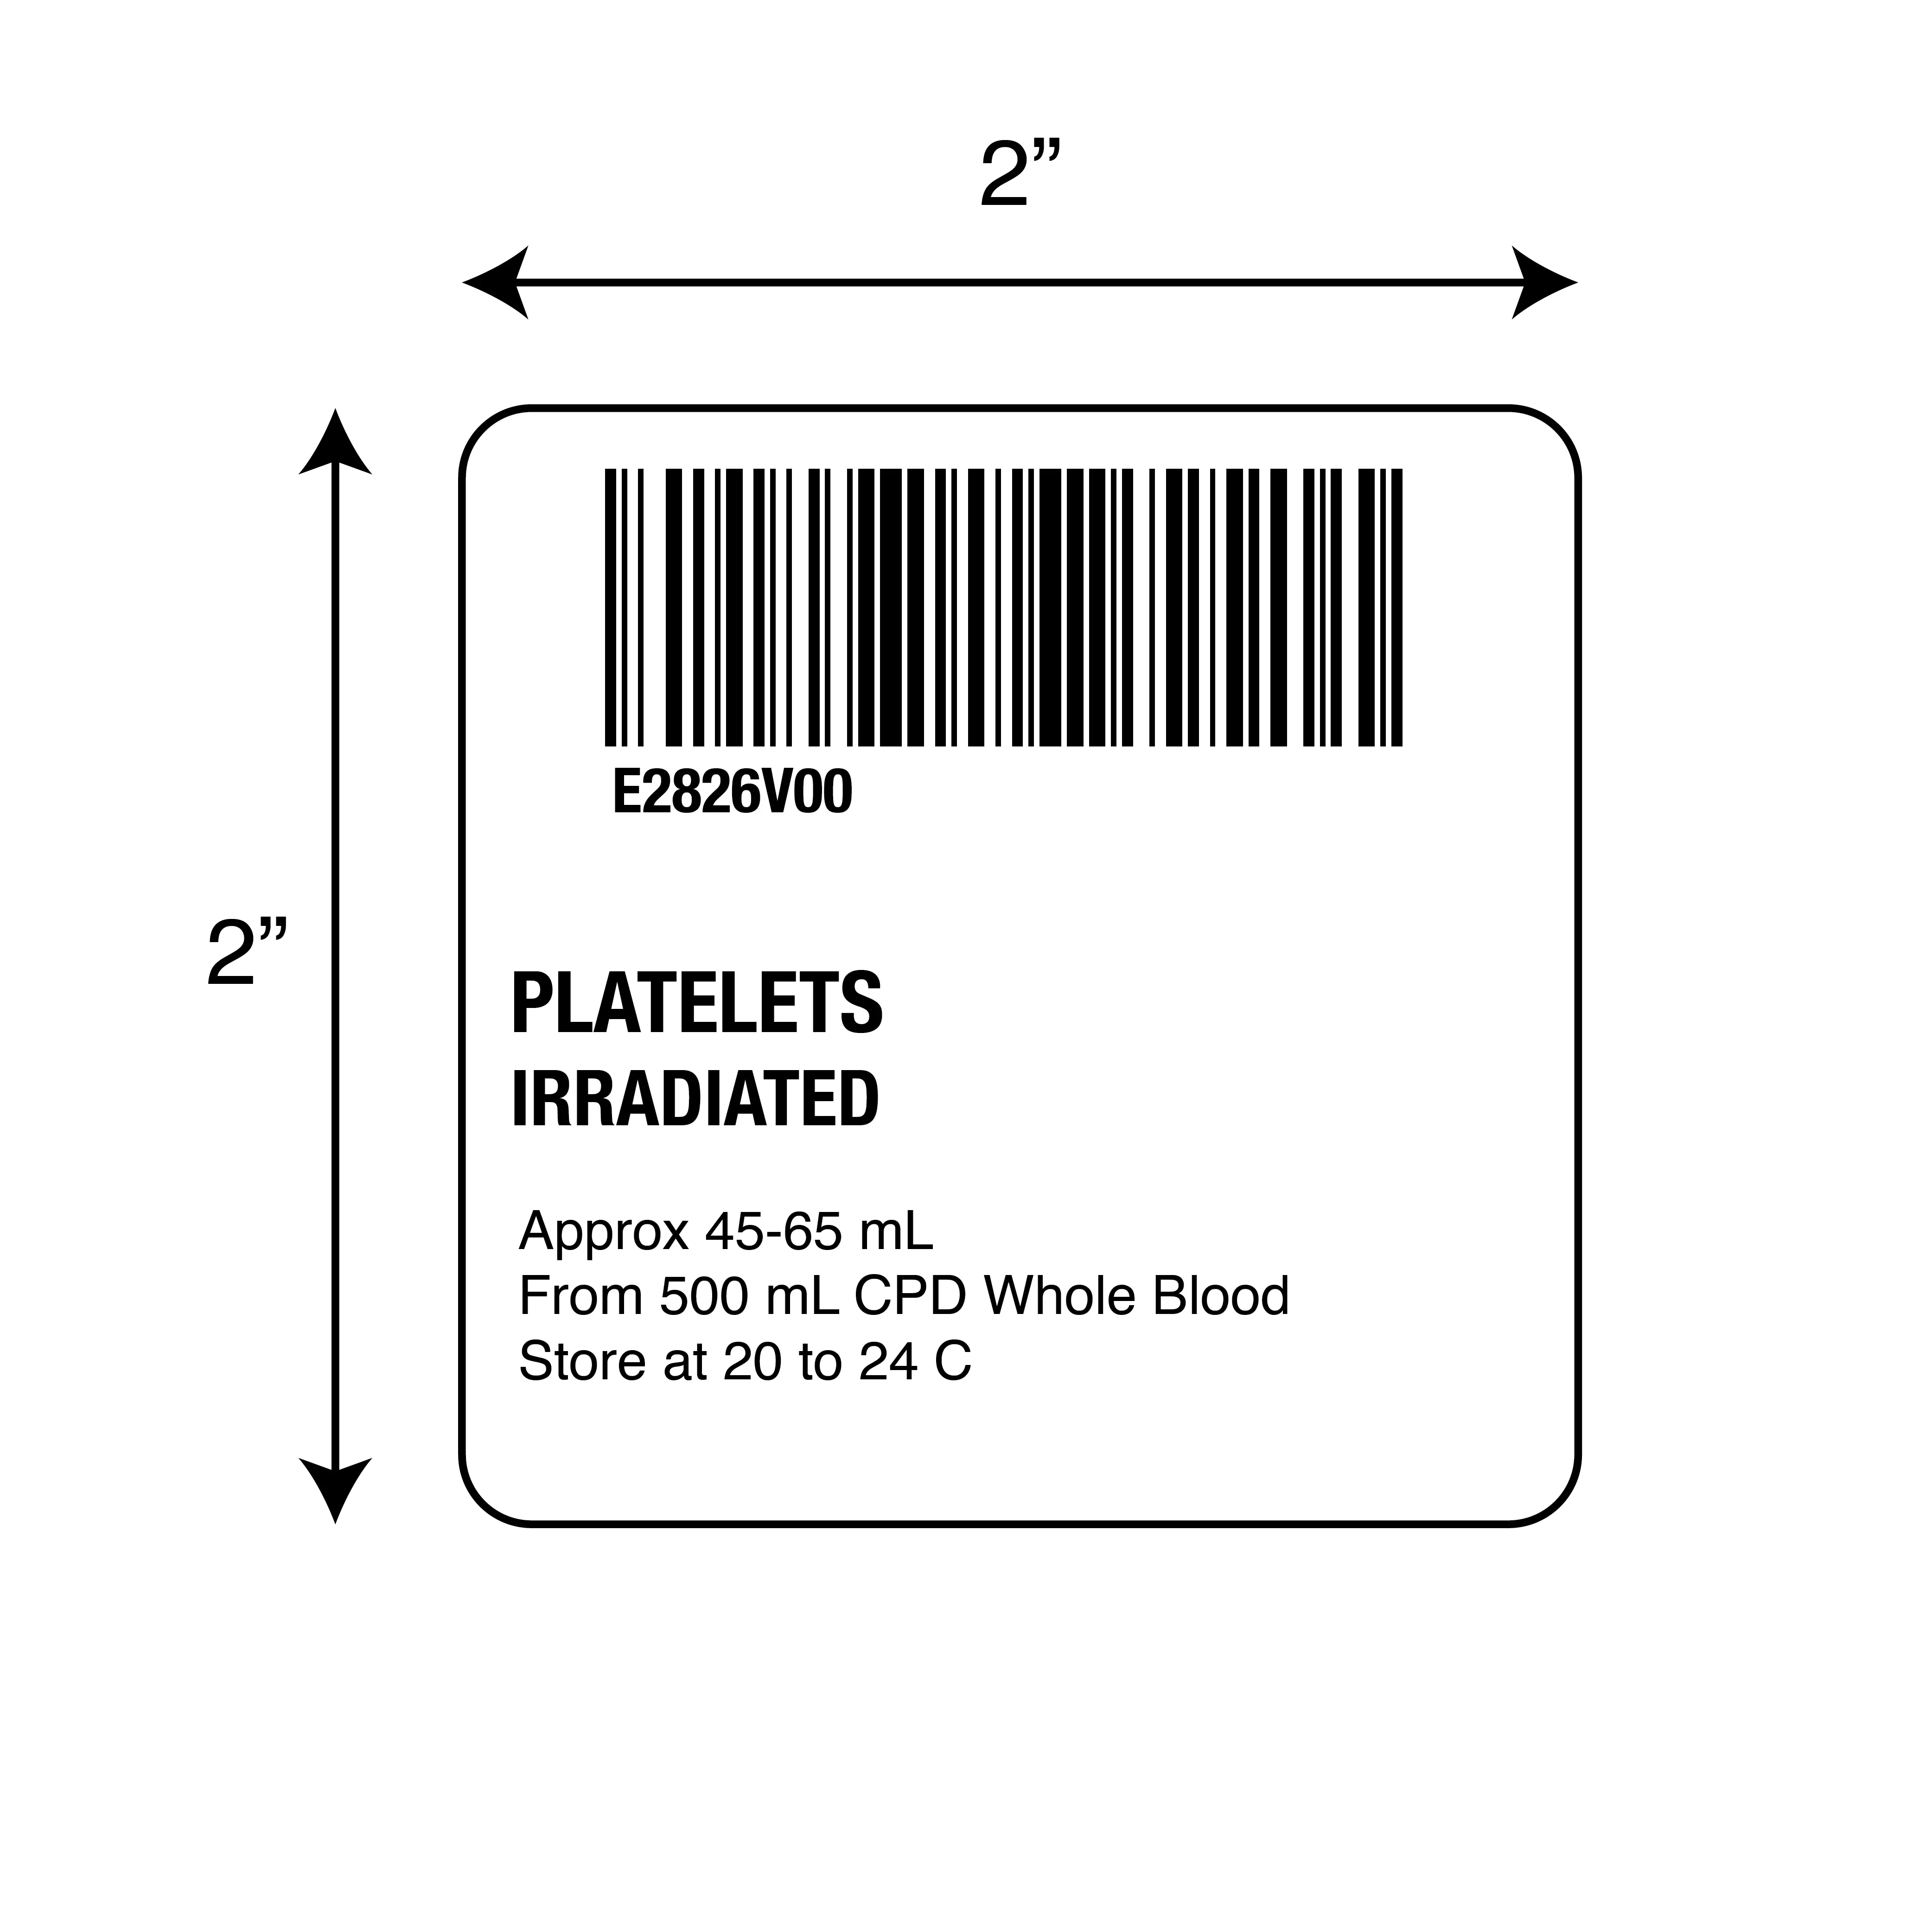 ISBT 128 Platelets Irradiated